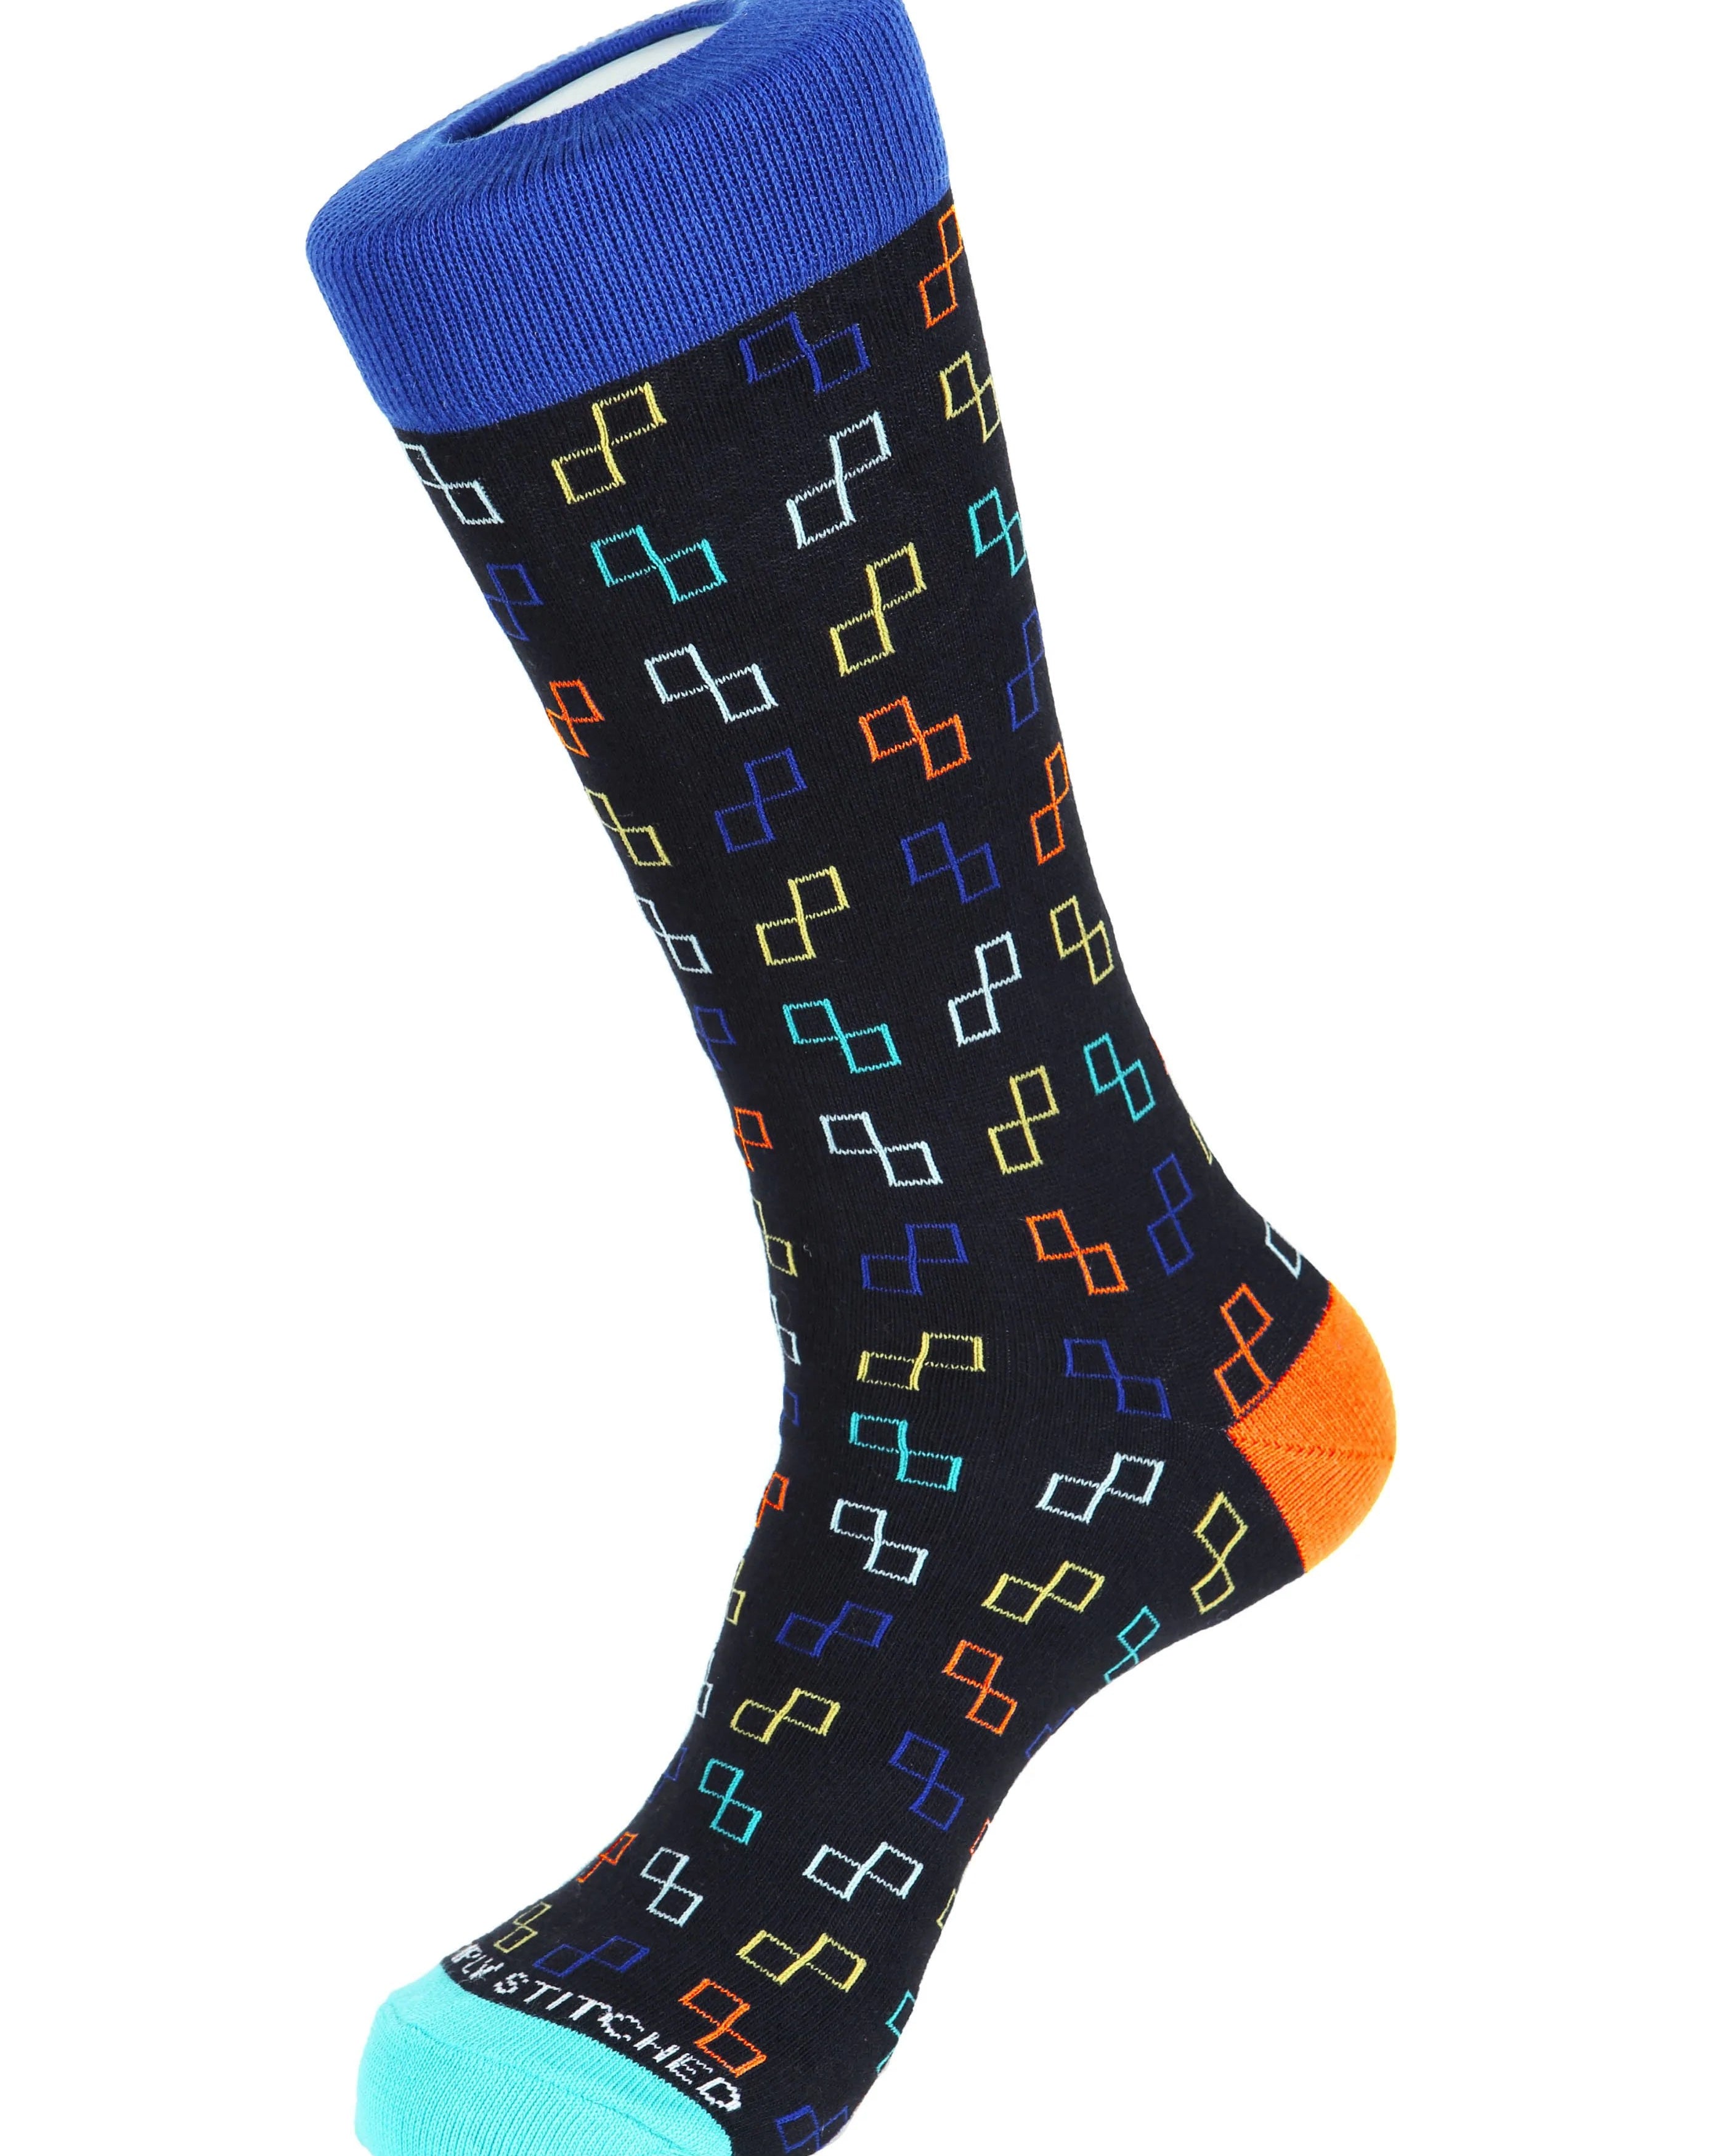 Matched Boxes Socks - Men's Socks at Menzclub